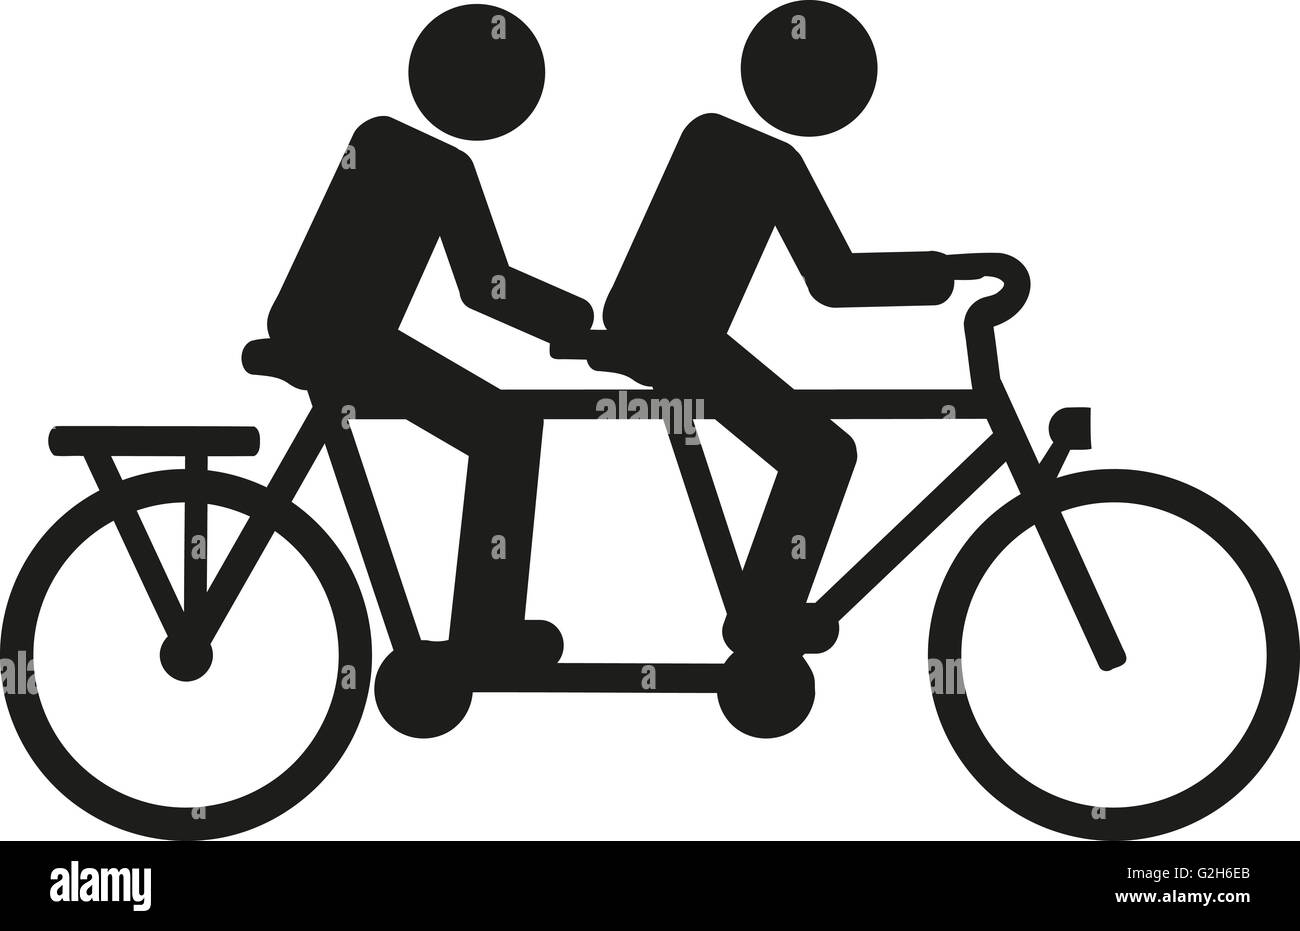 Tandem bicycle pictogram Stock Photo